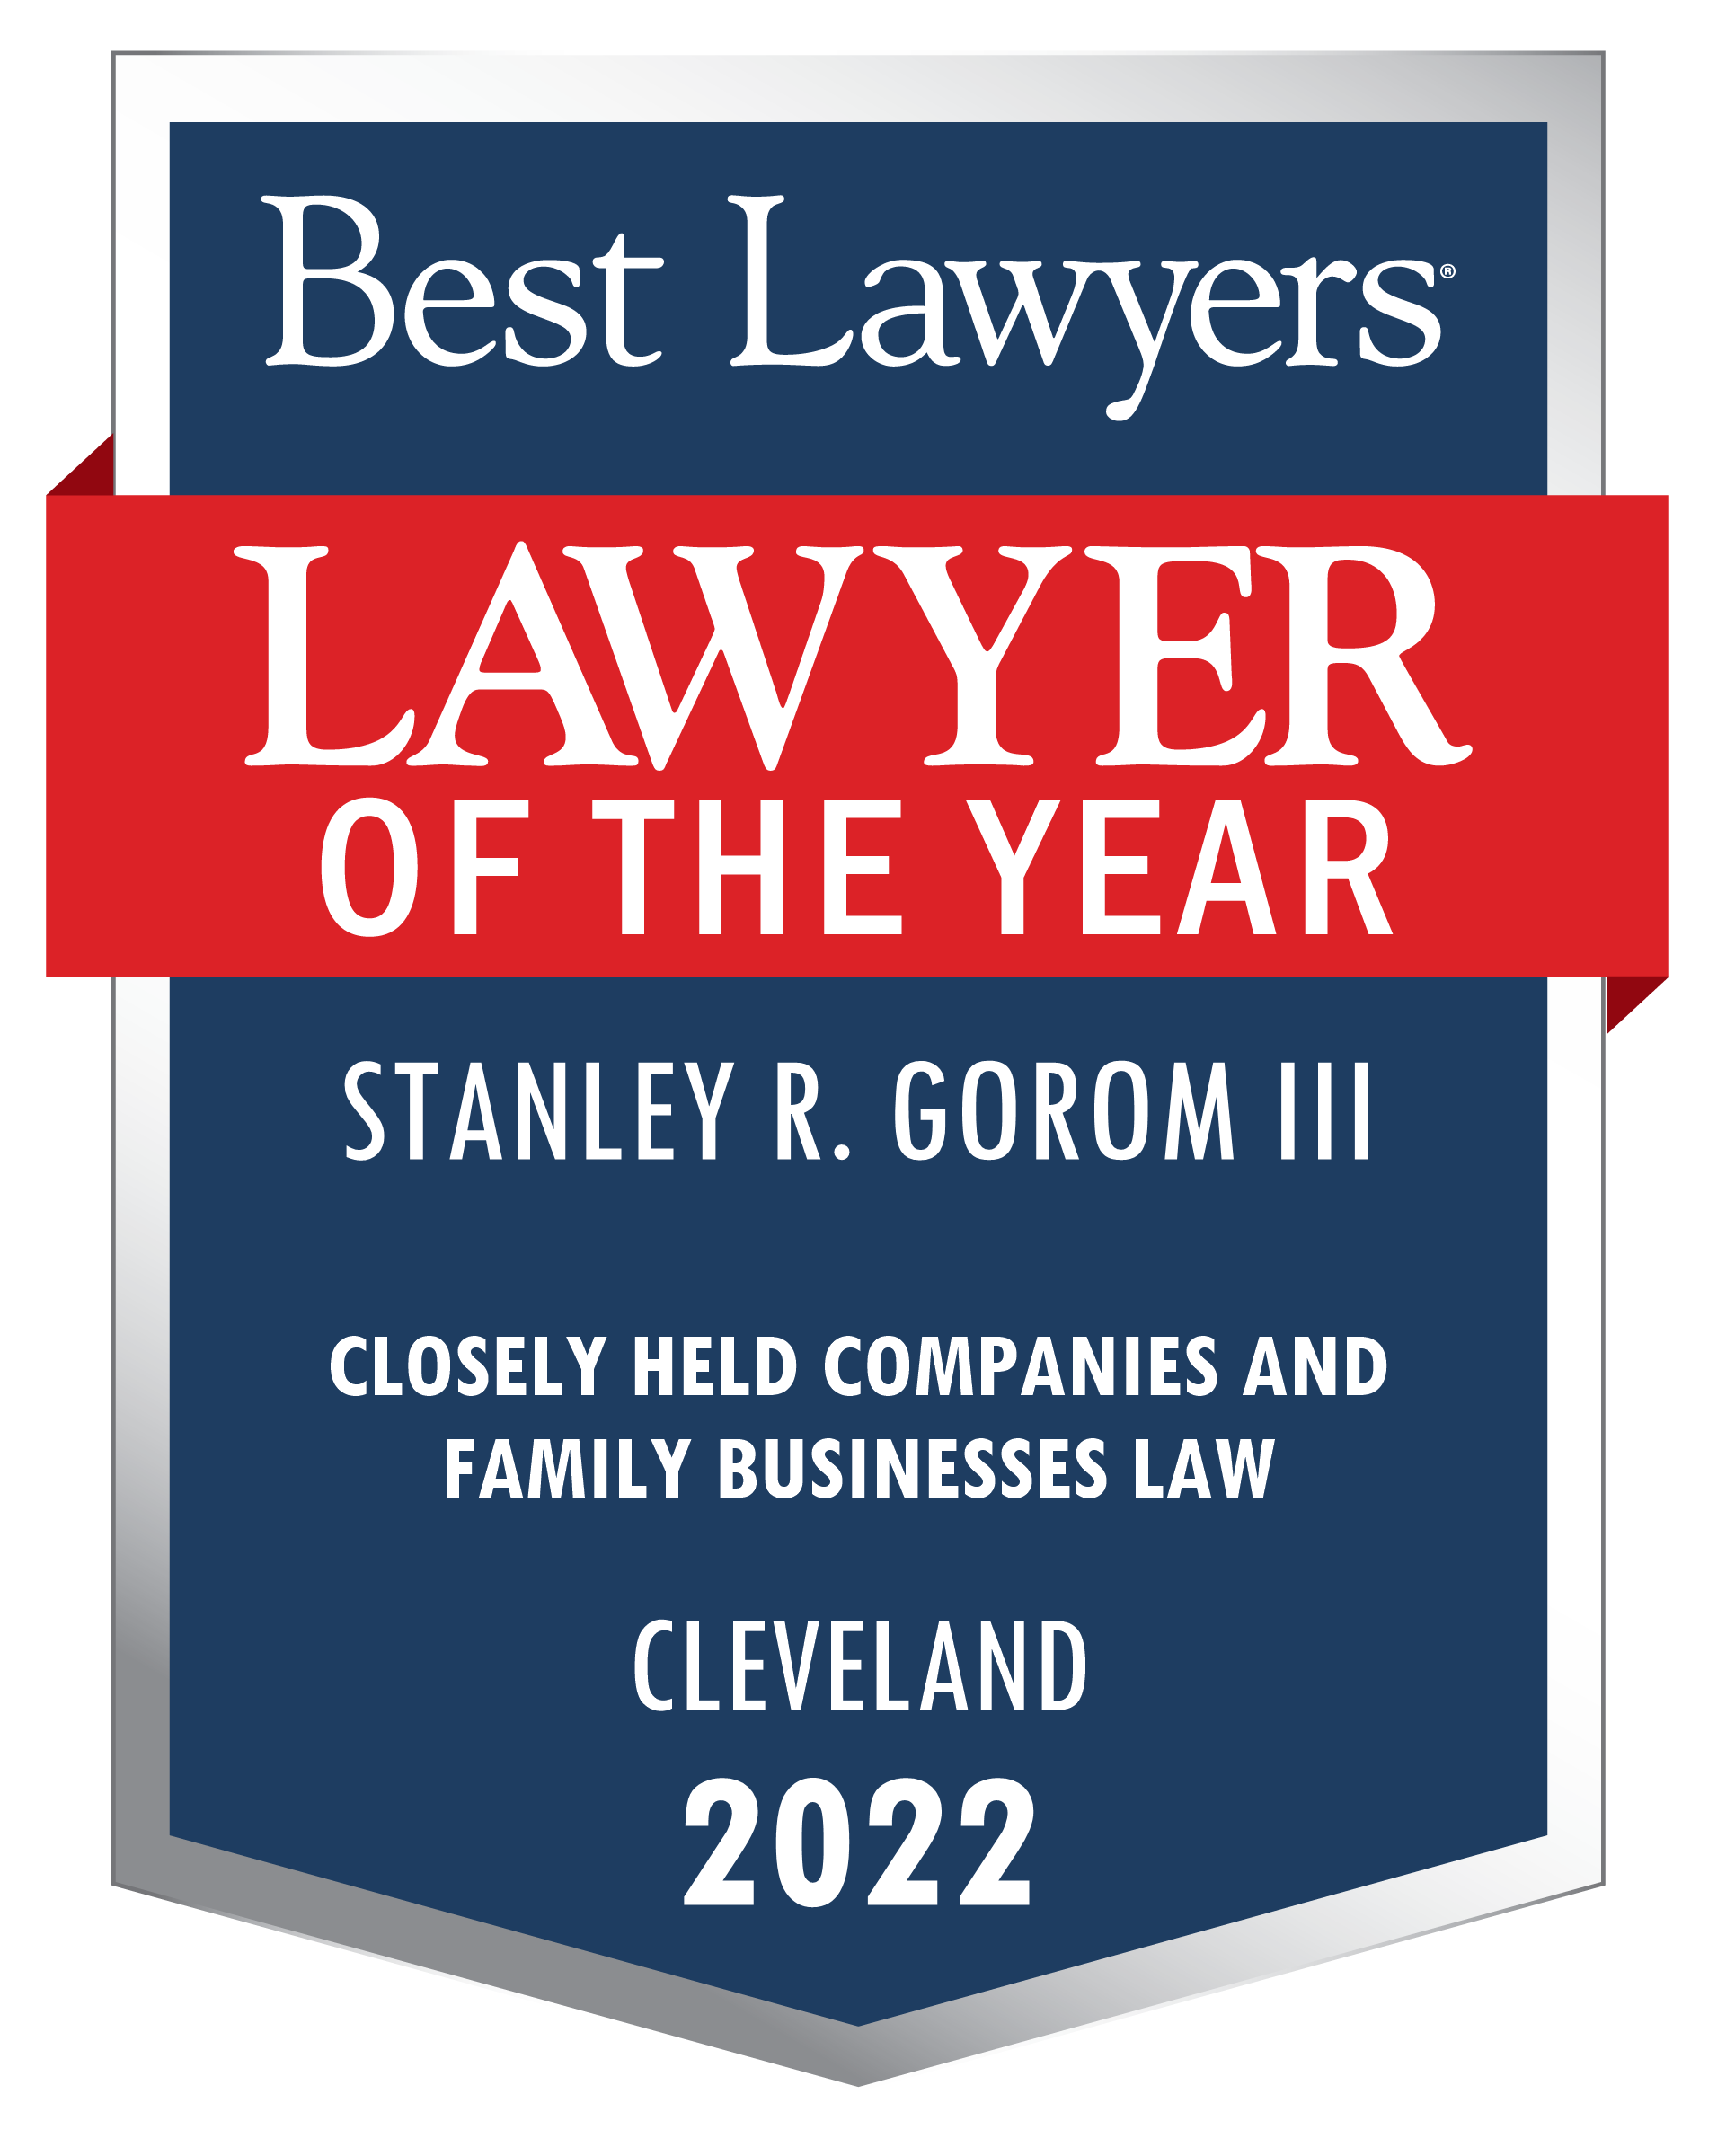 Best Lawyers Lawyer of the year - Stanley R Gorom III